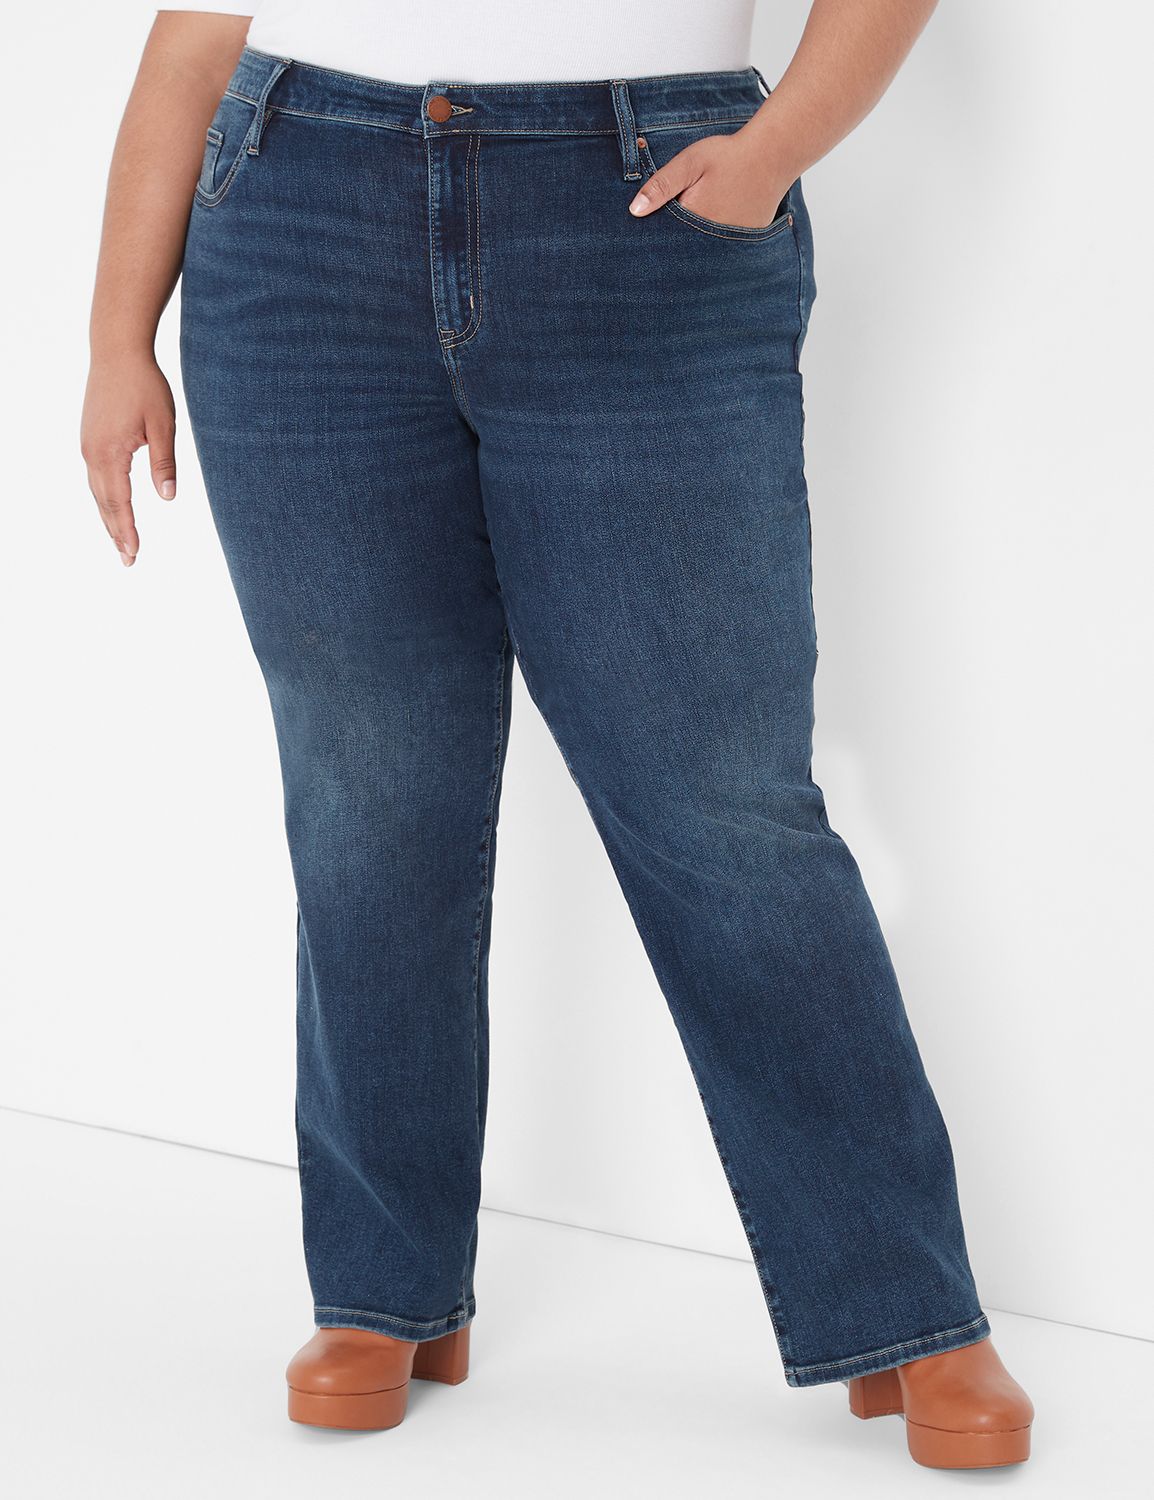 Women's Mid Rise Jeans, Explore our New Arrivals